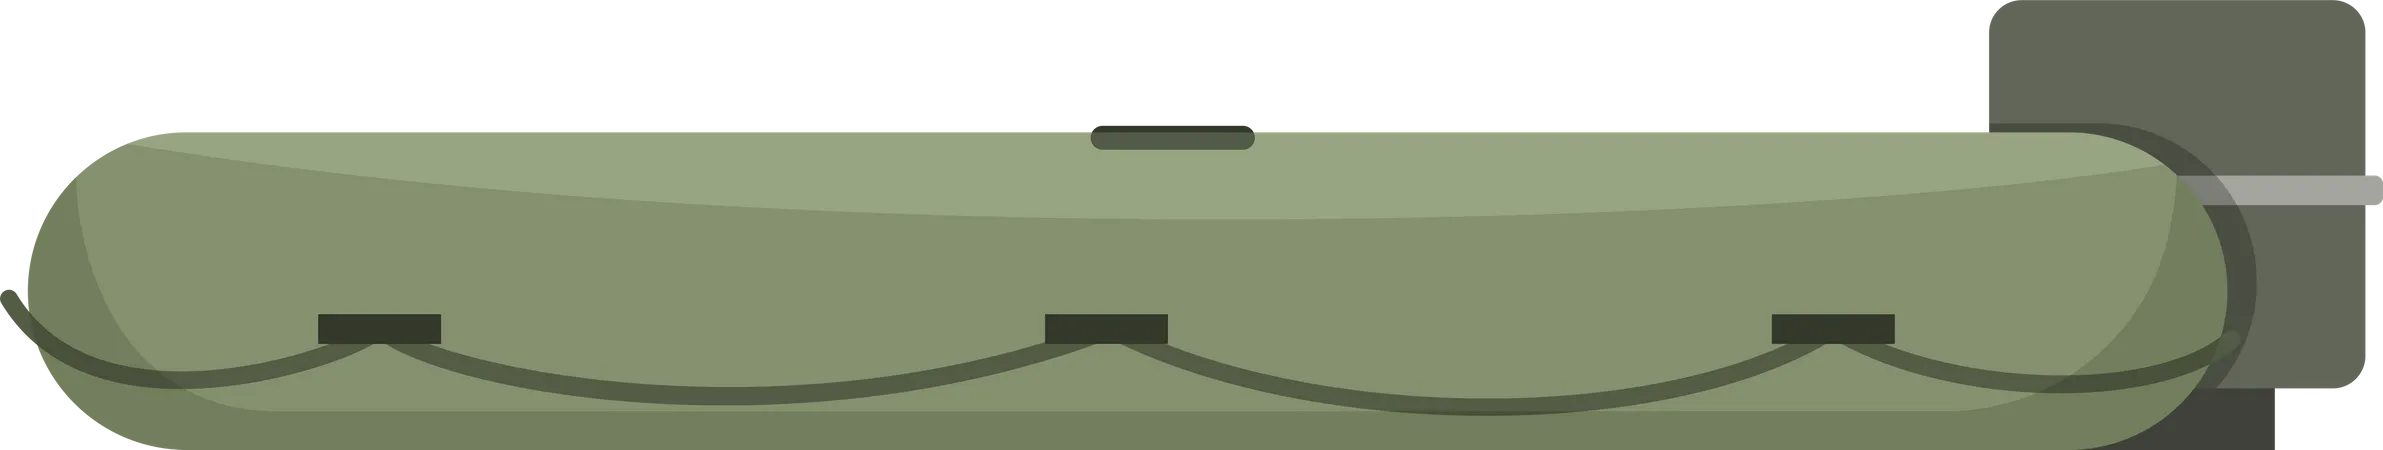 Military Boat Illustration